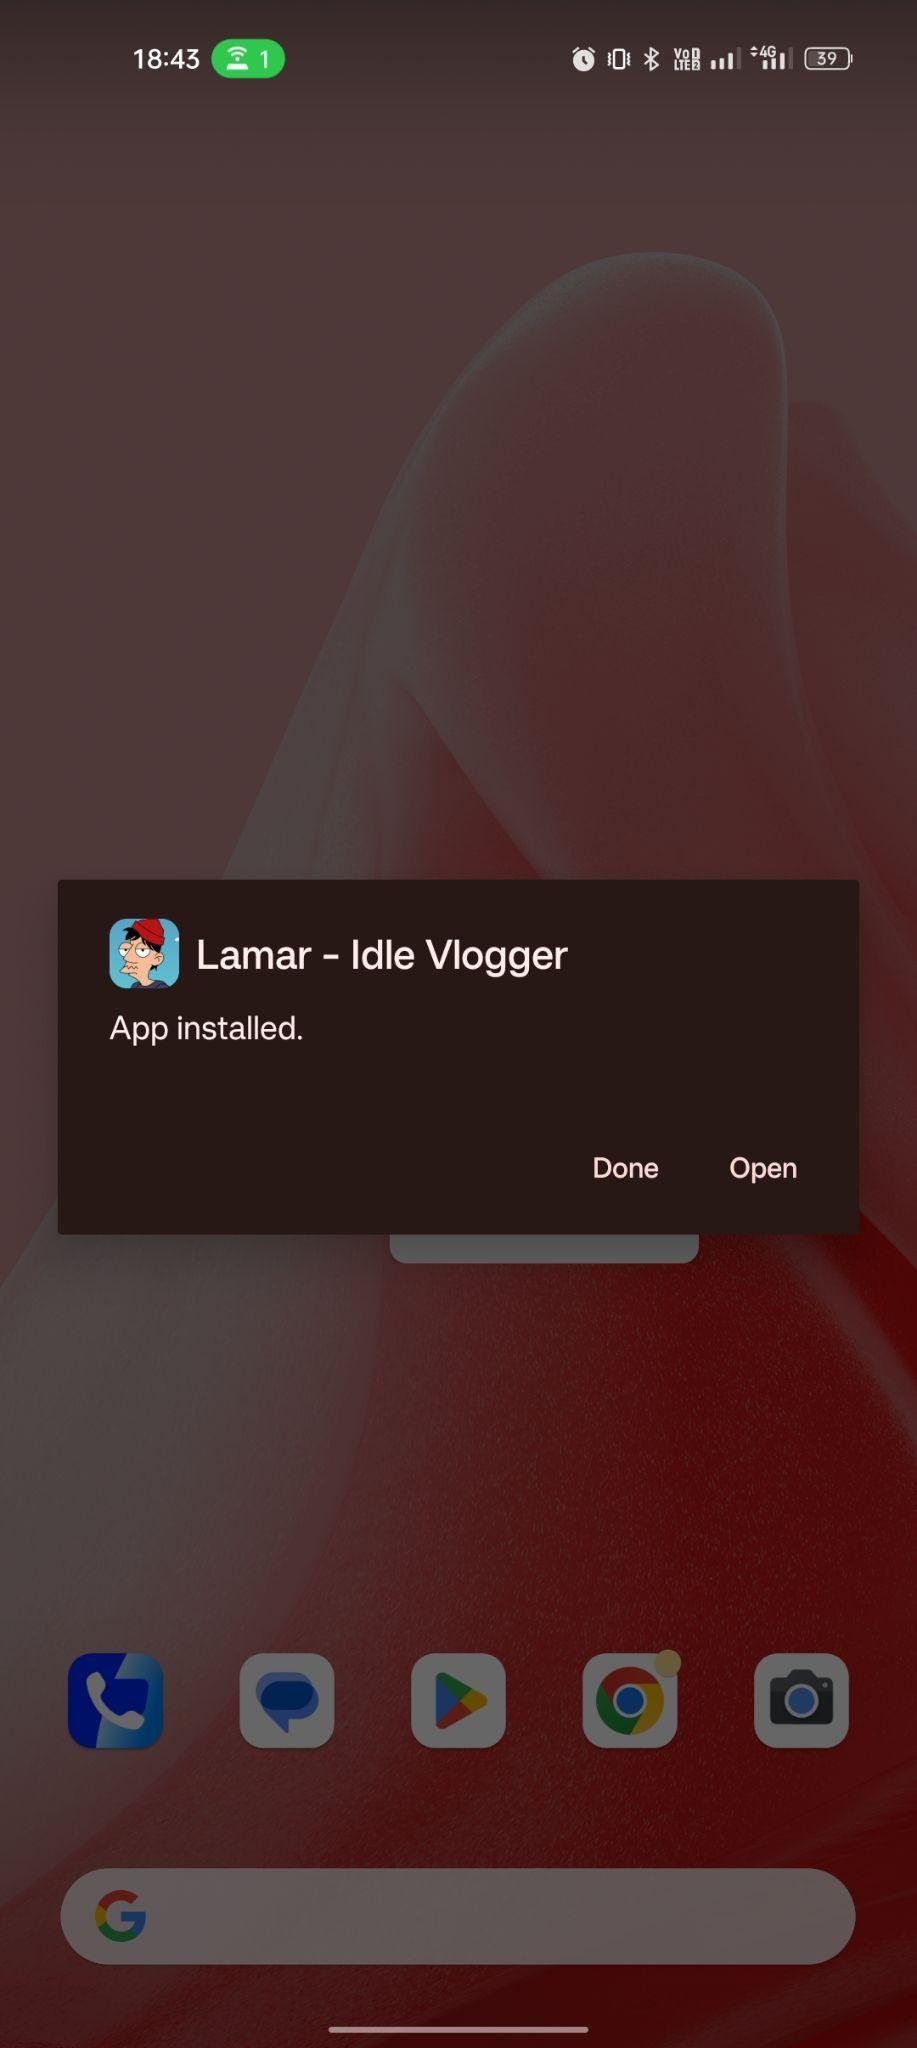 Lamar - Idle Vlogger apk installed